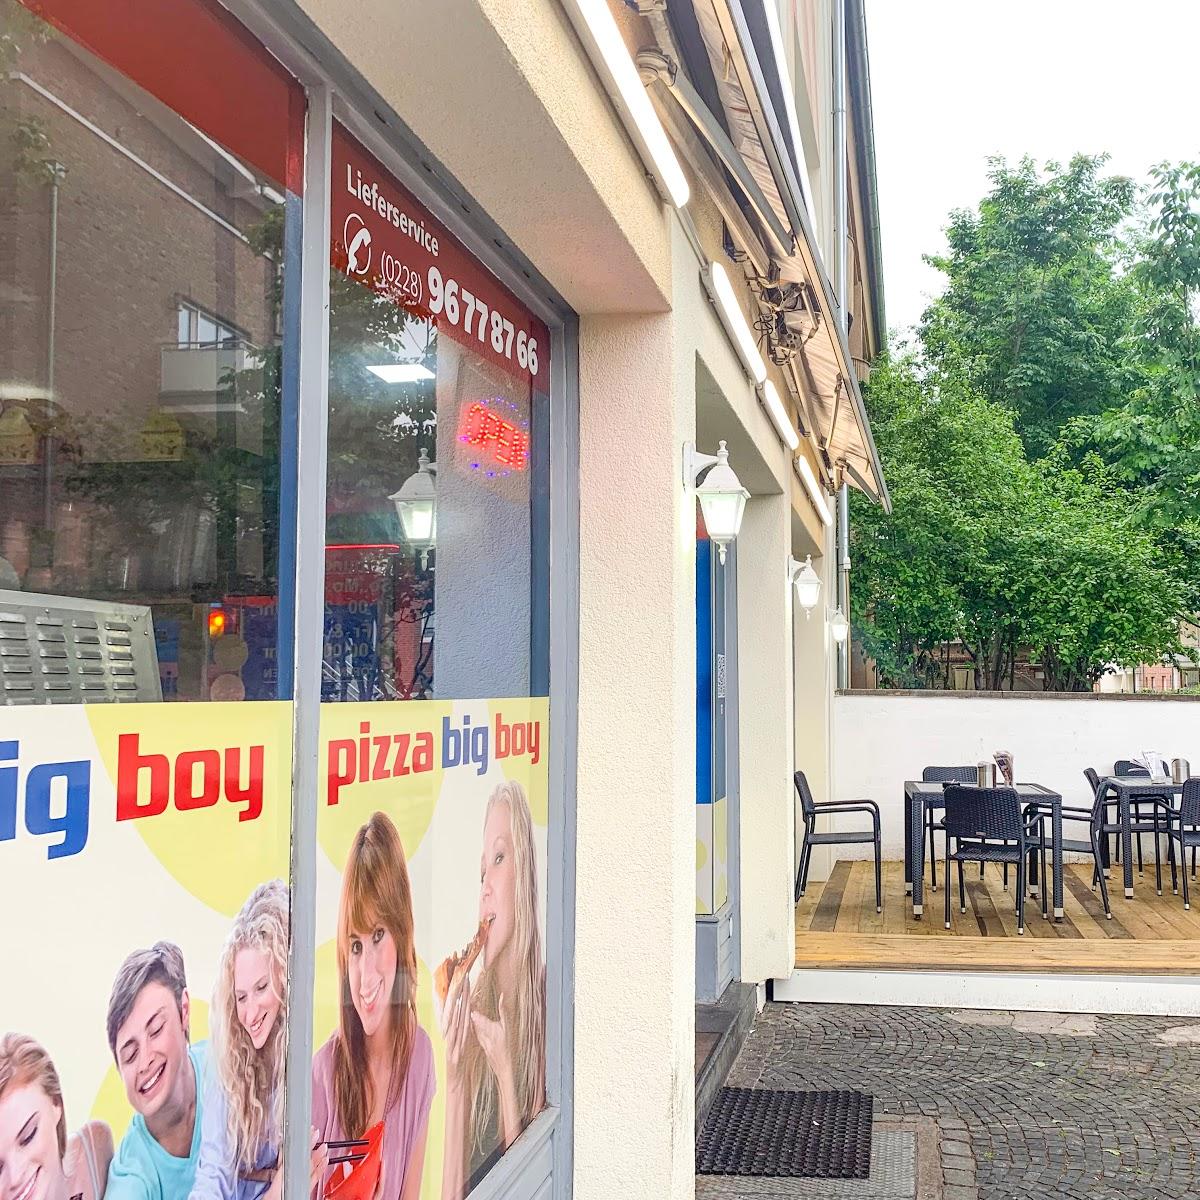 Restaurant "Pizza Big Boy" in Bonn